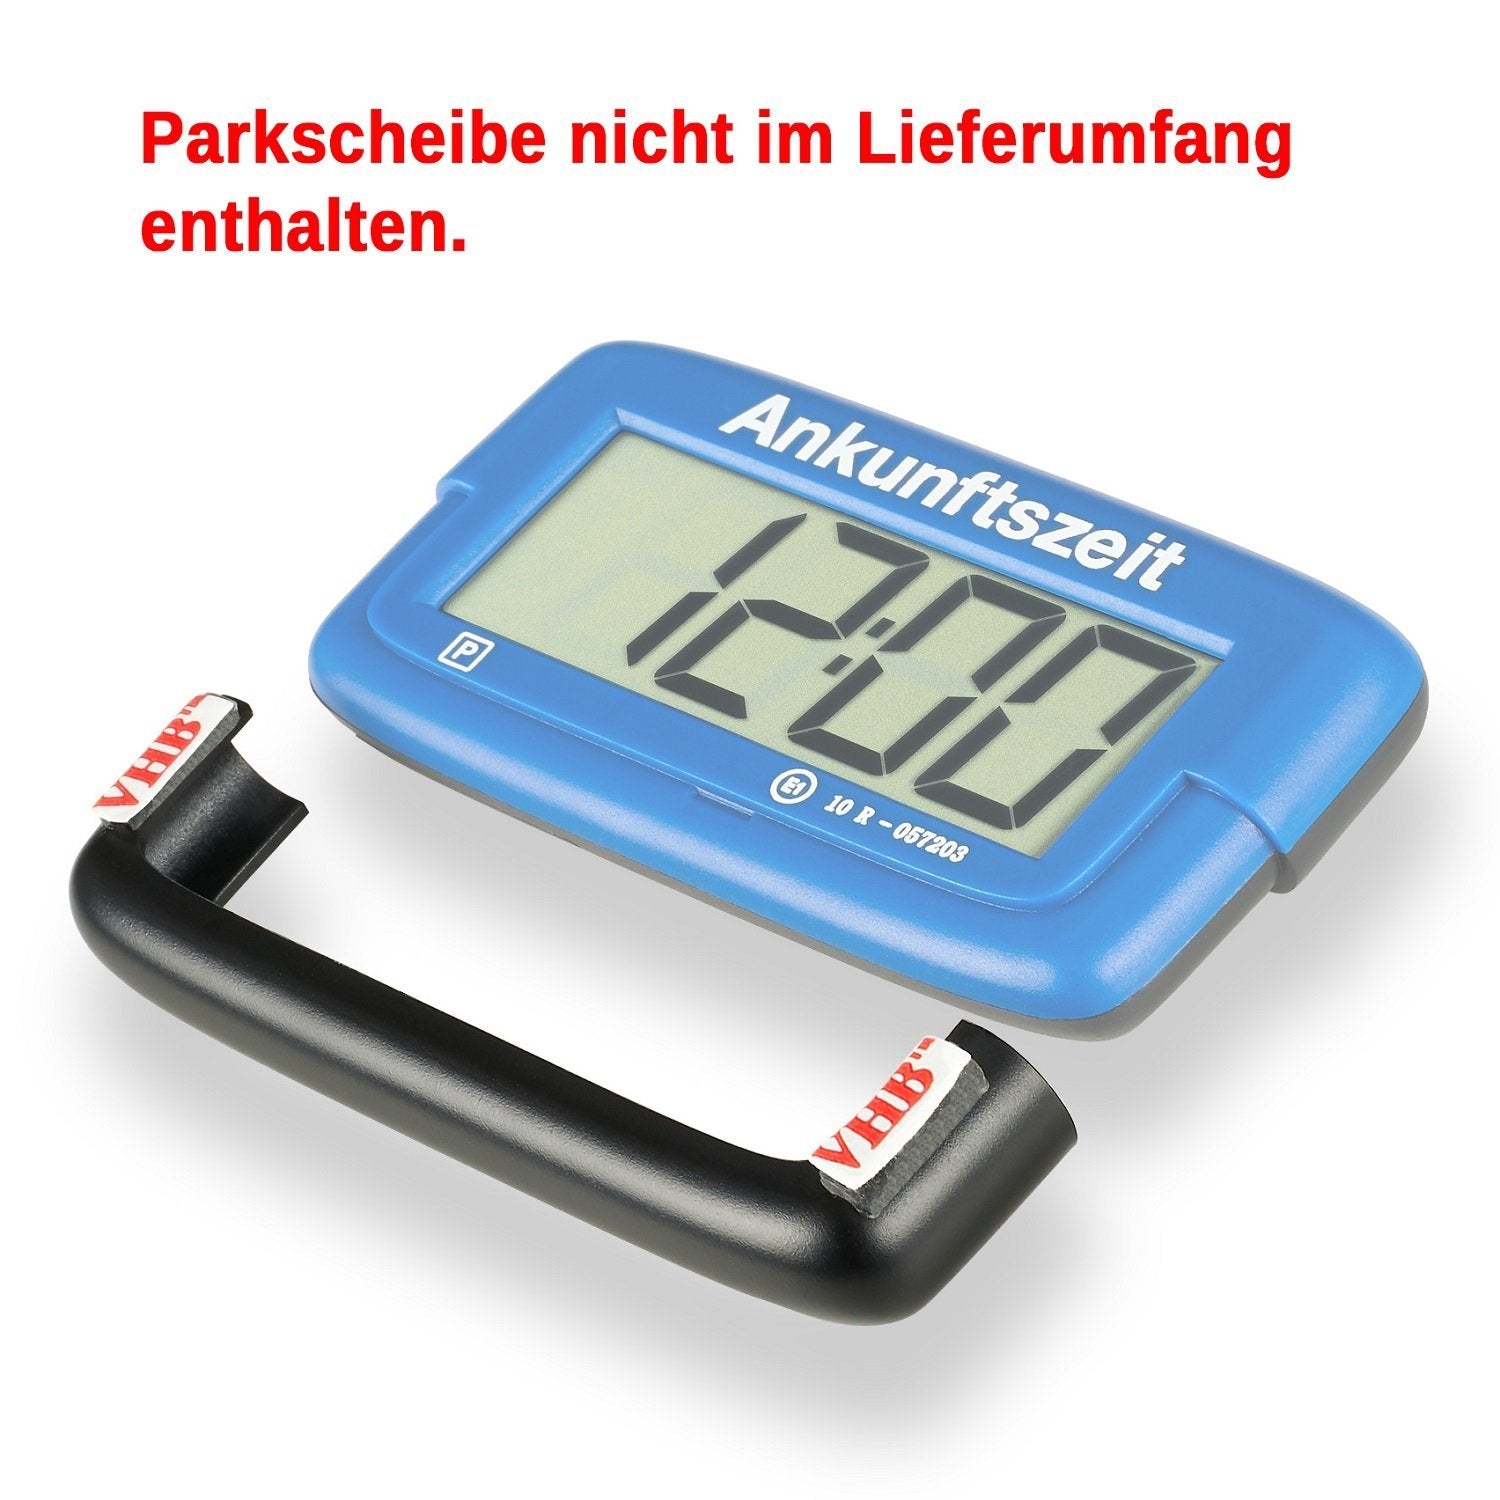 ERSATZ KLEBEPADS FÜR Needit PARK MINI - elektronische Parkscheibe - 2 Stück  SET EUR 5,75 - PicClick DE